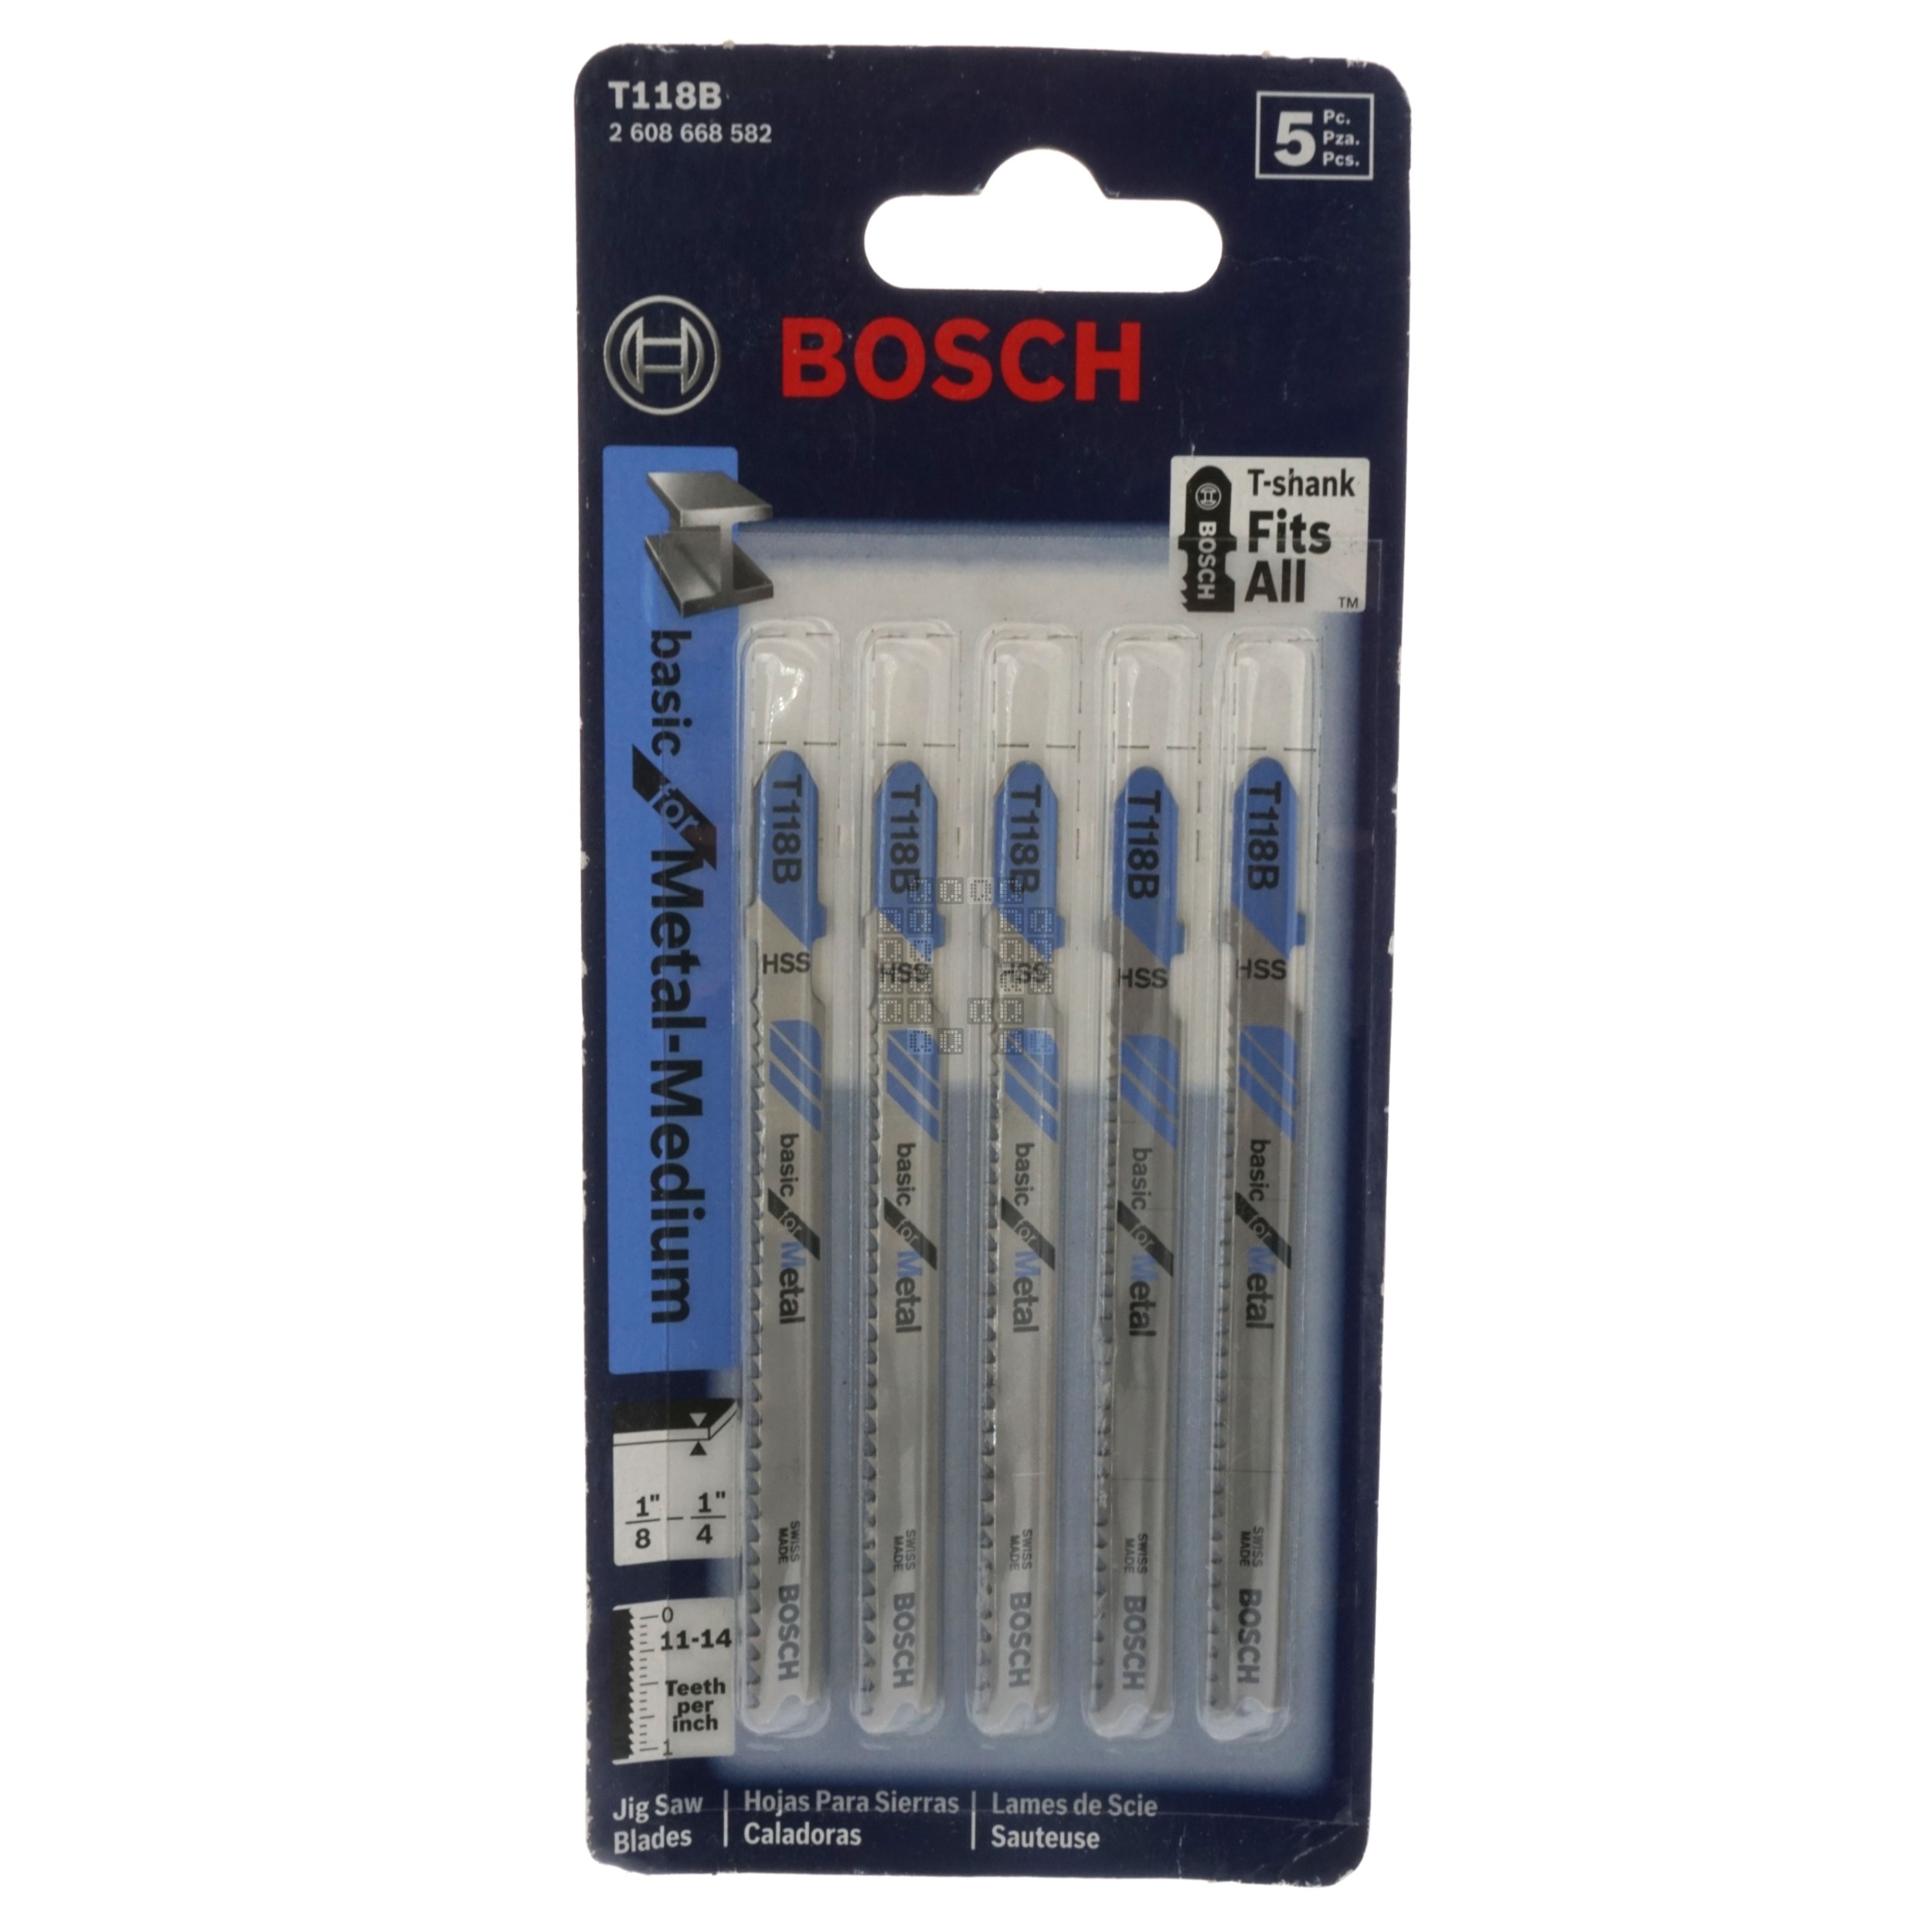 Bosch 2608668582 T118B T-Shank Jig Saw Blades, 11-14TPI, 3-5/8" Length, 5-Pack